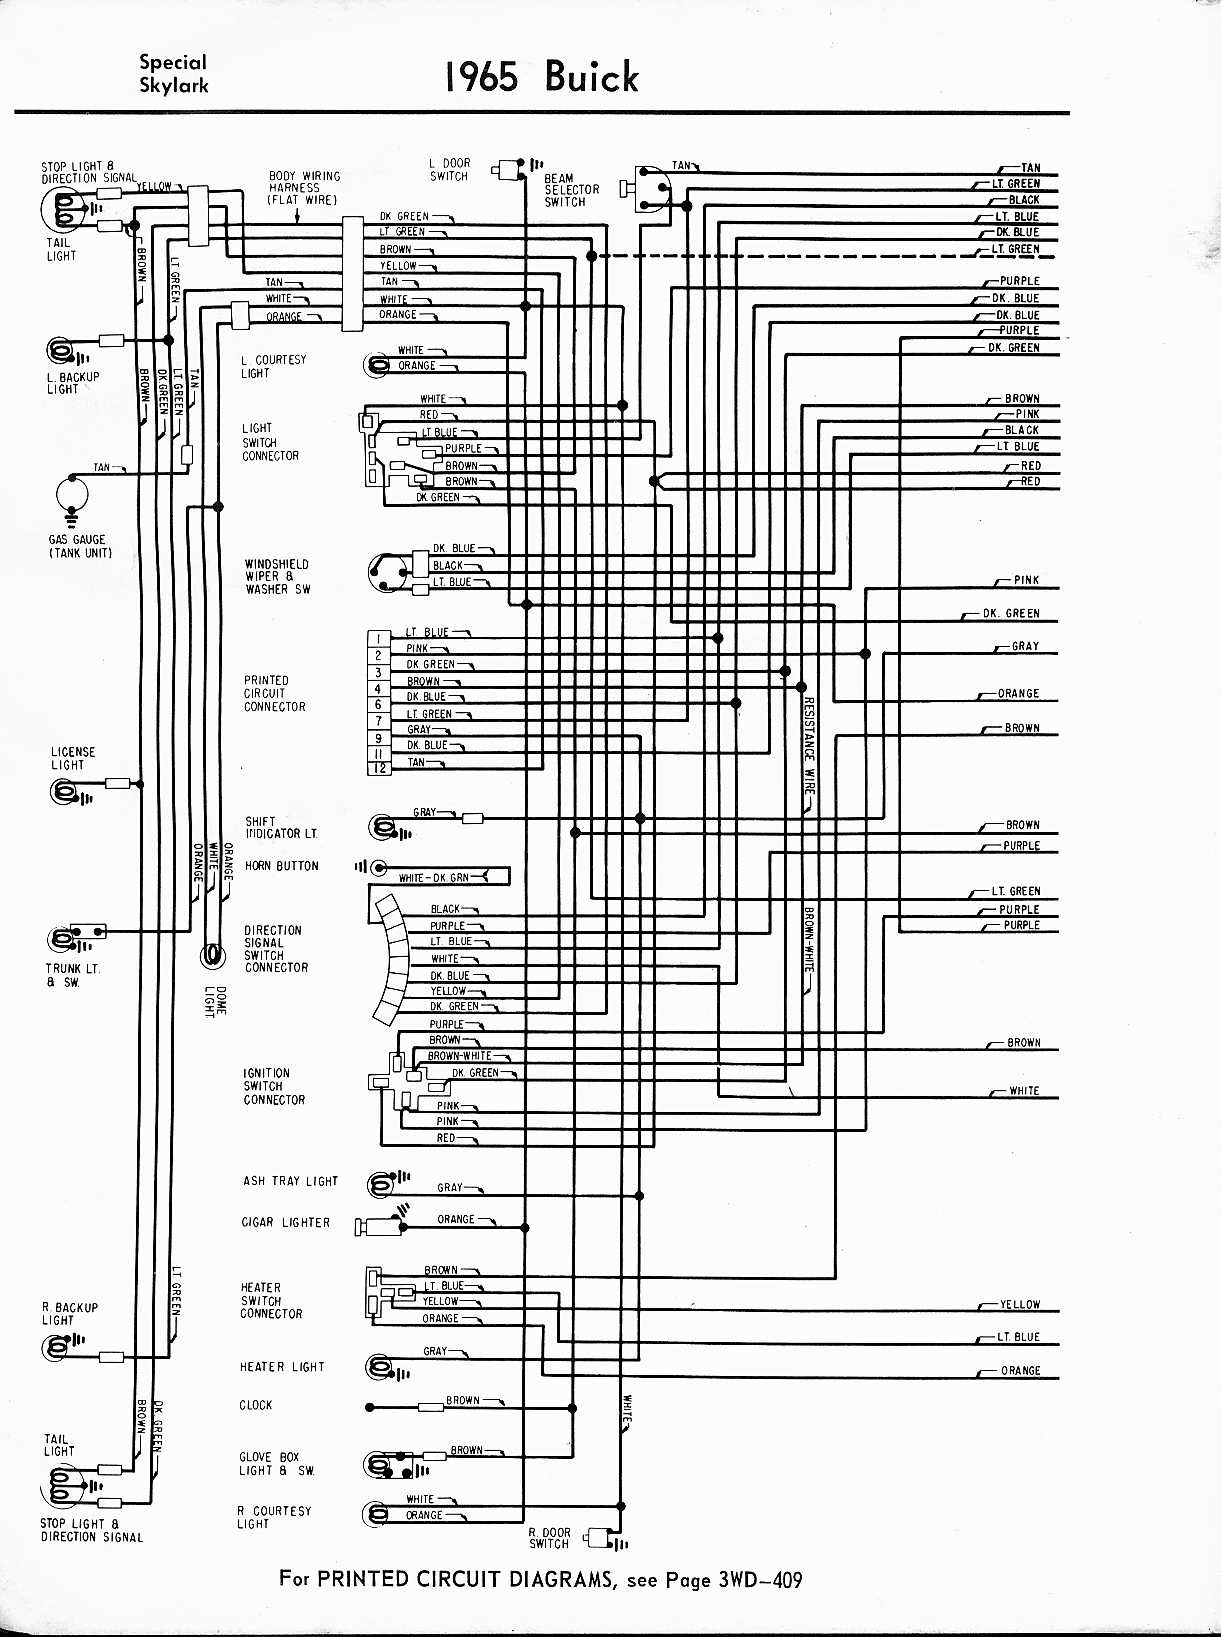 1965 Skylark LQ9 Retrofit / Swap - Build Thread - Page 10 ... 1971 camaro horn relay wiring diagram 